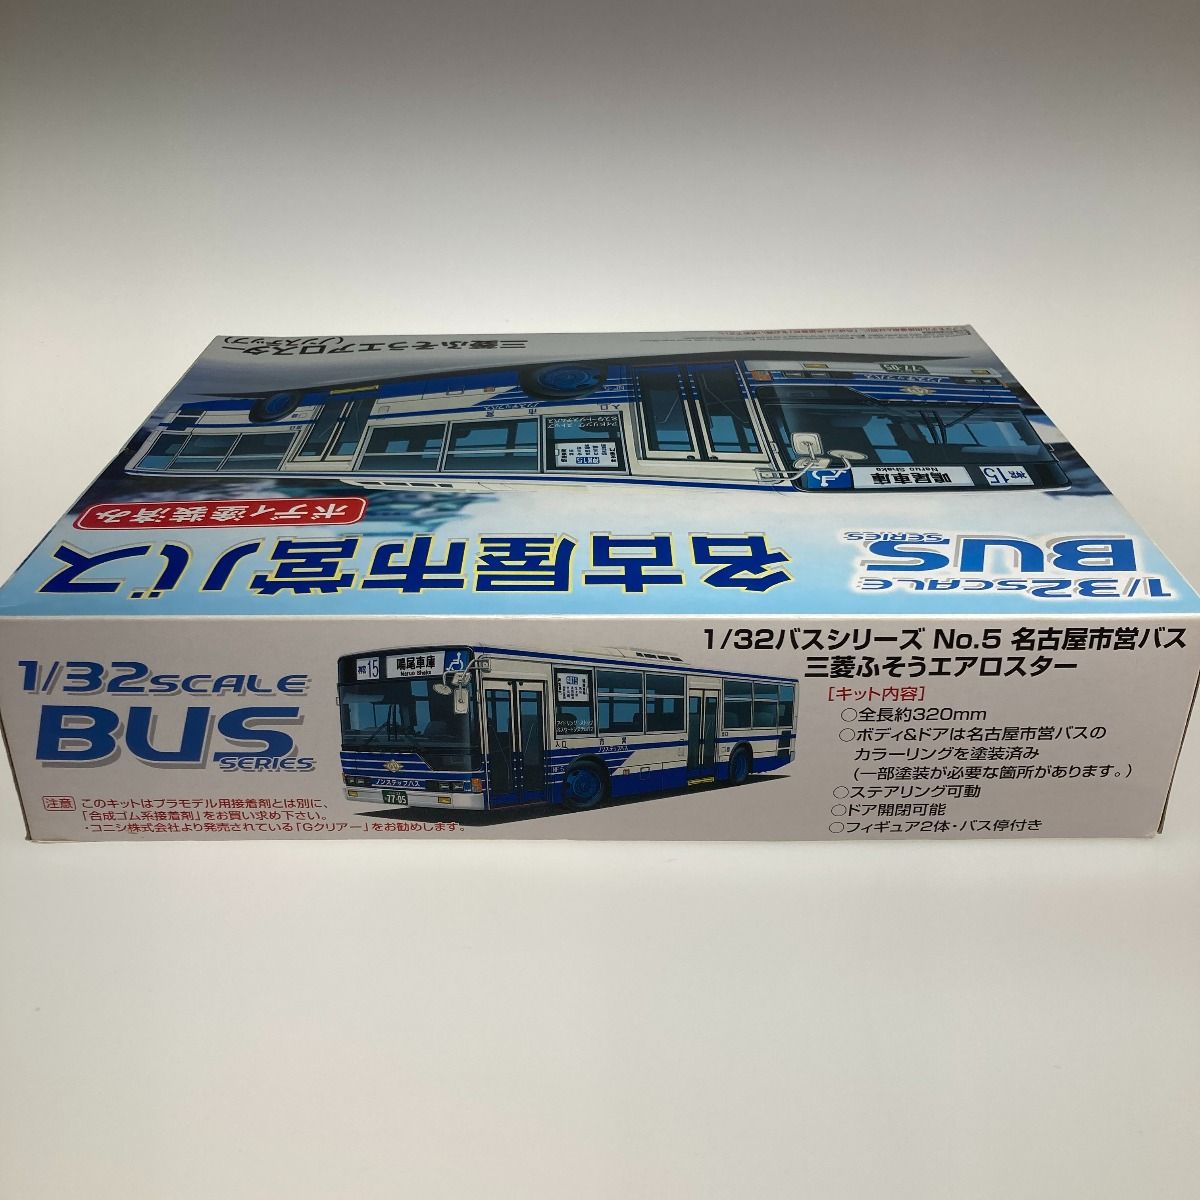 1 32 BUS 京成バス 三菱ふそうエアロスター(ノンステップ) - 自動車